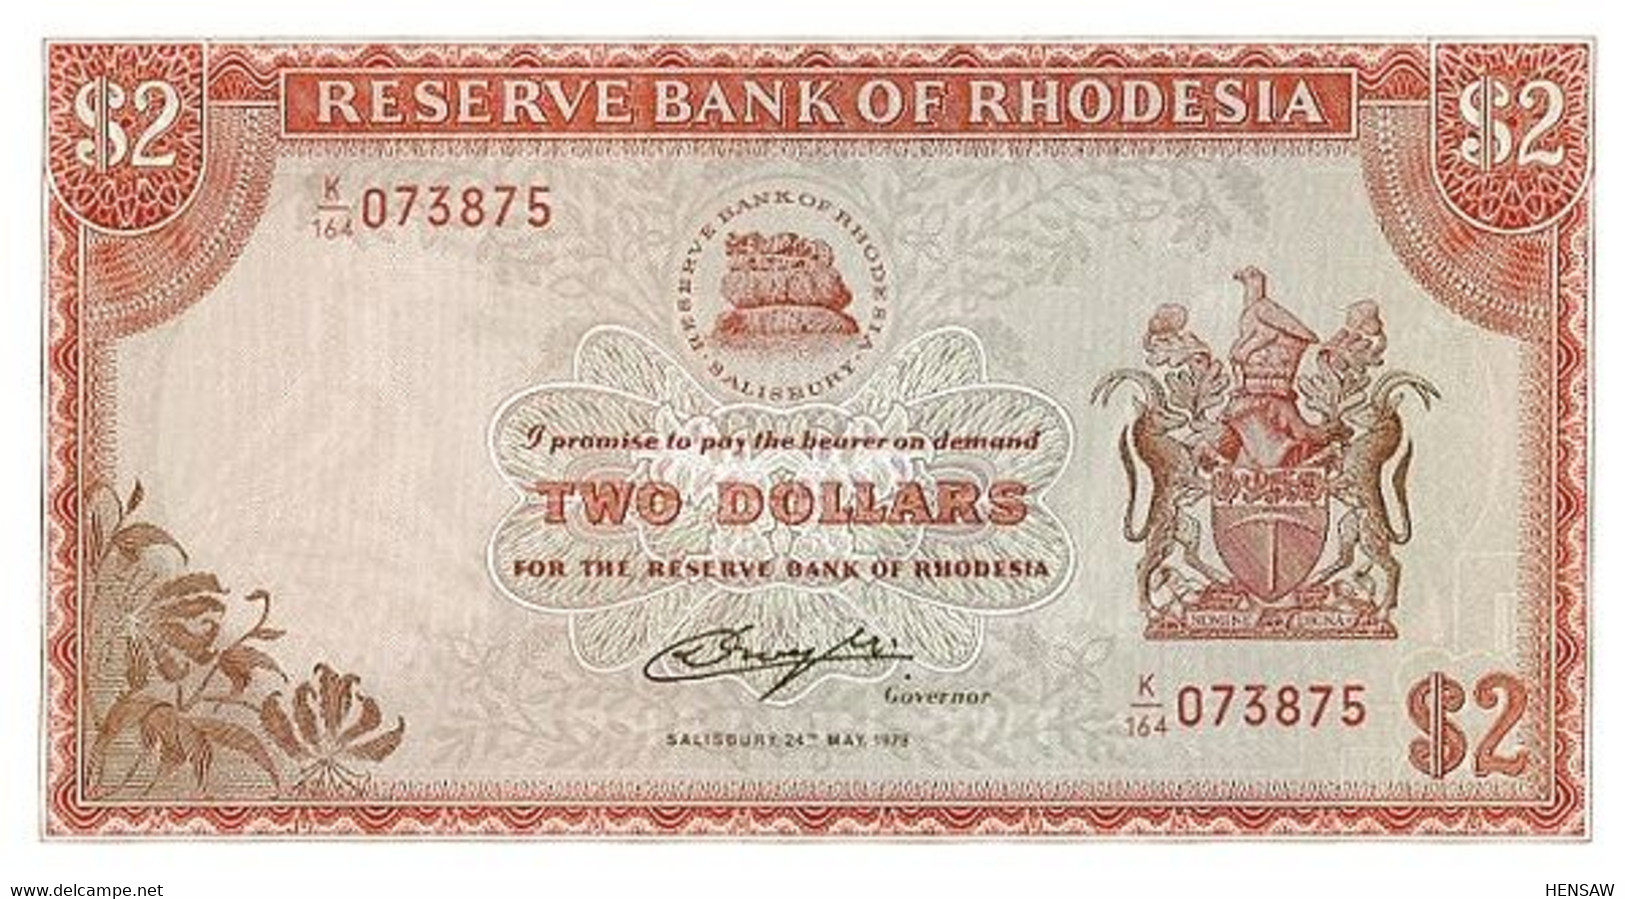 RHODESIA 2 DOLLARS 1979 P 39 UNC SC NUEVO - Rhodesia